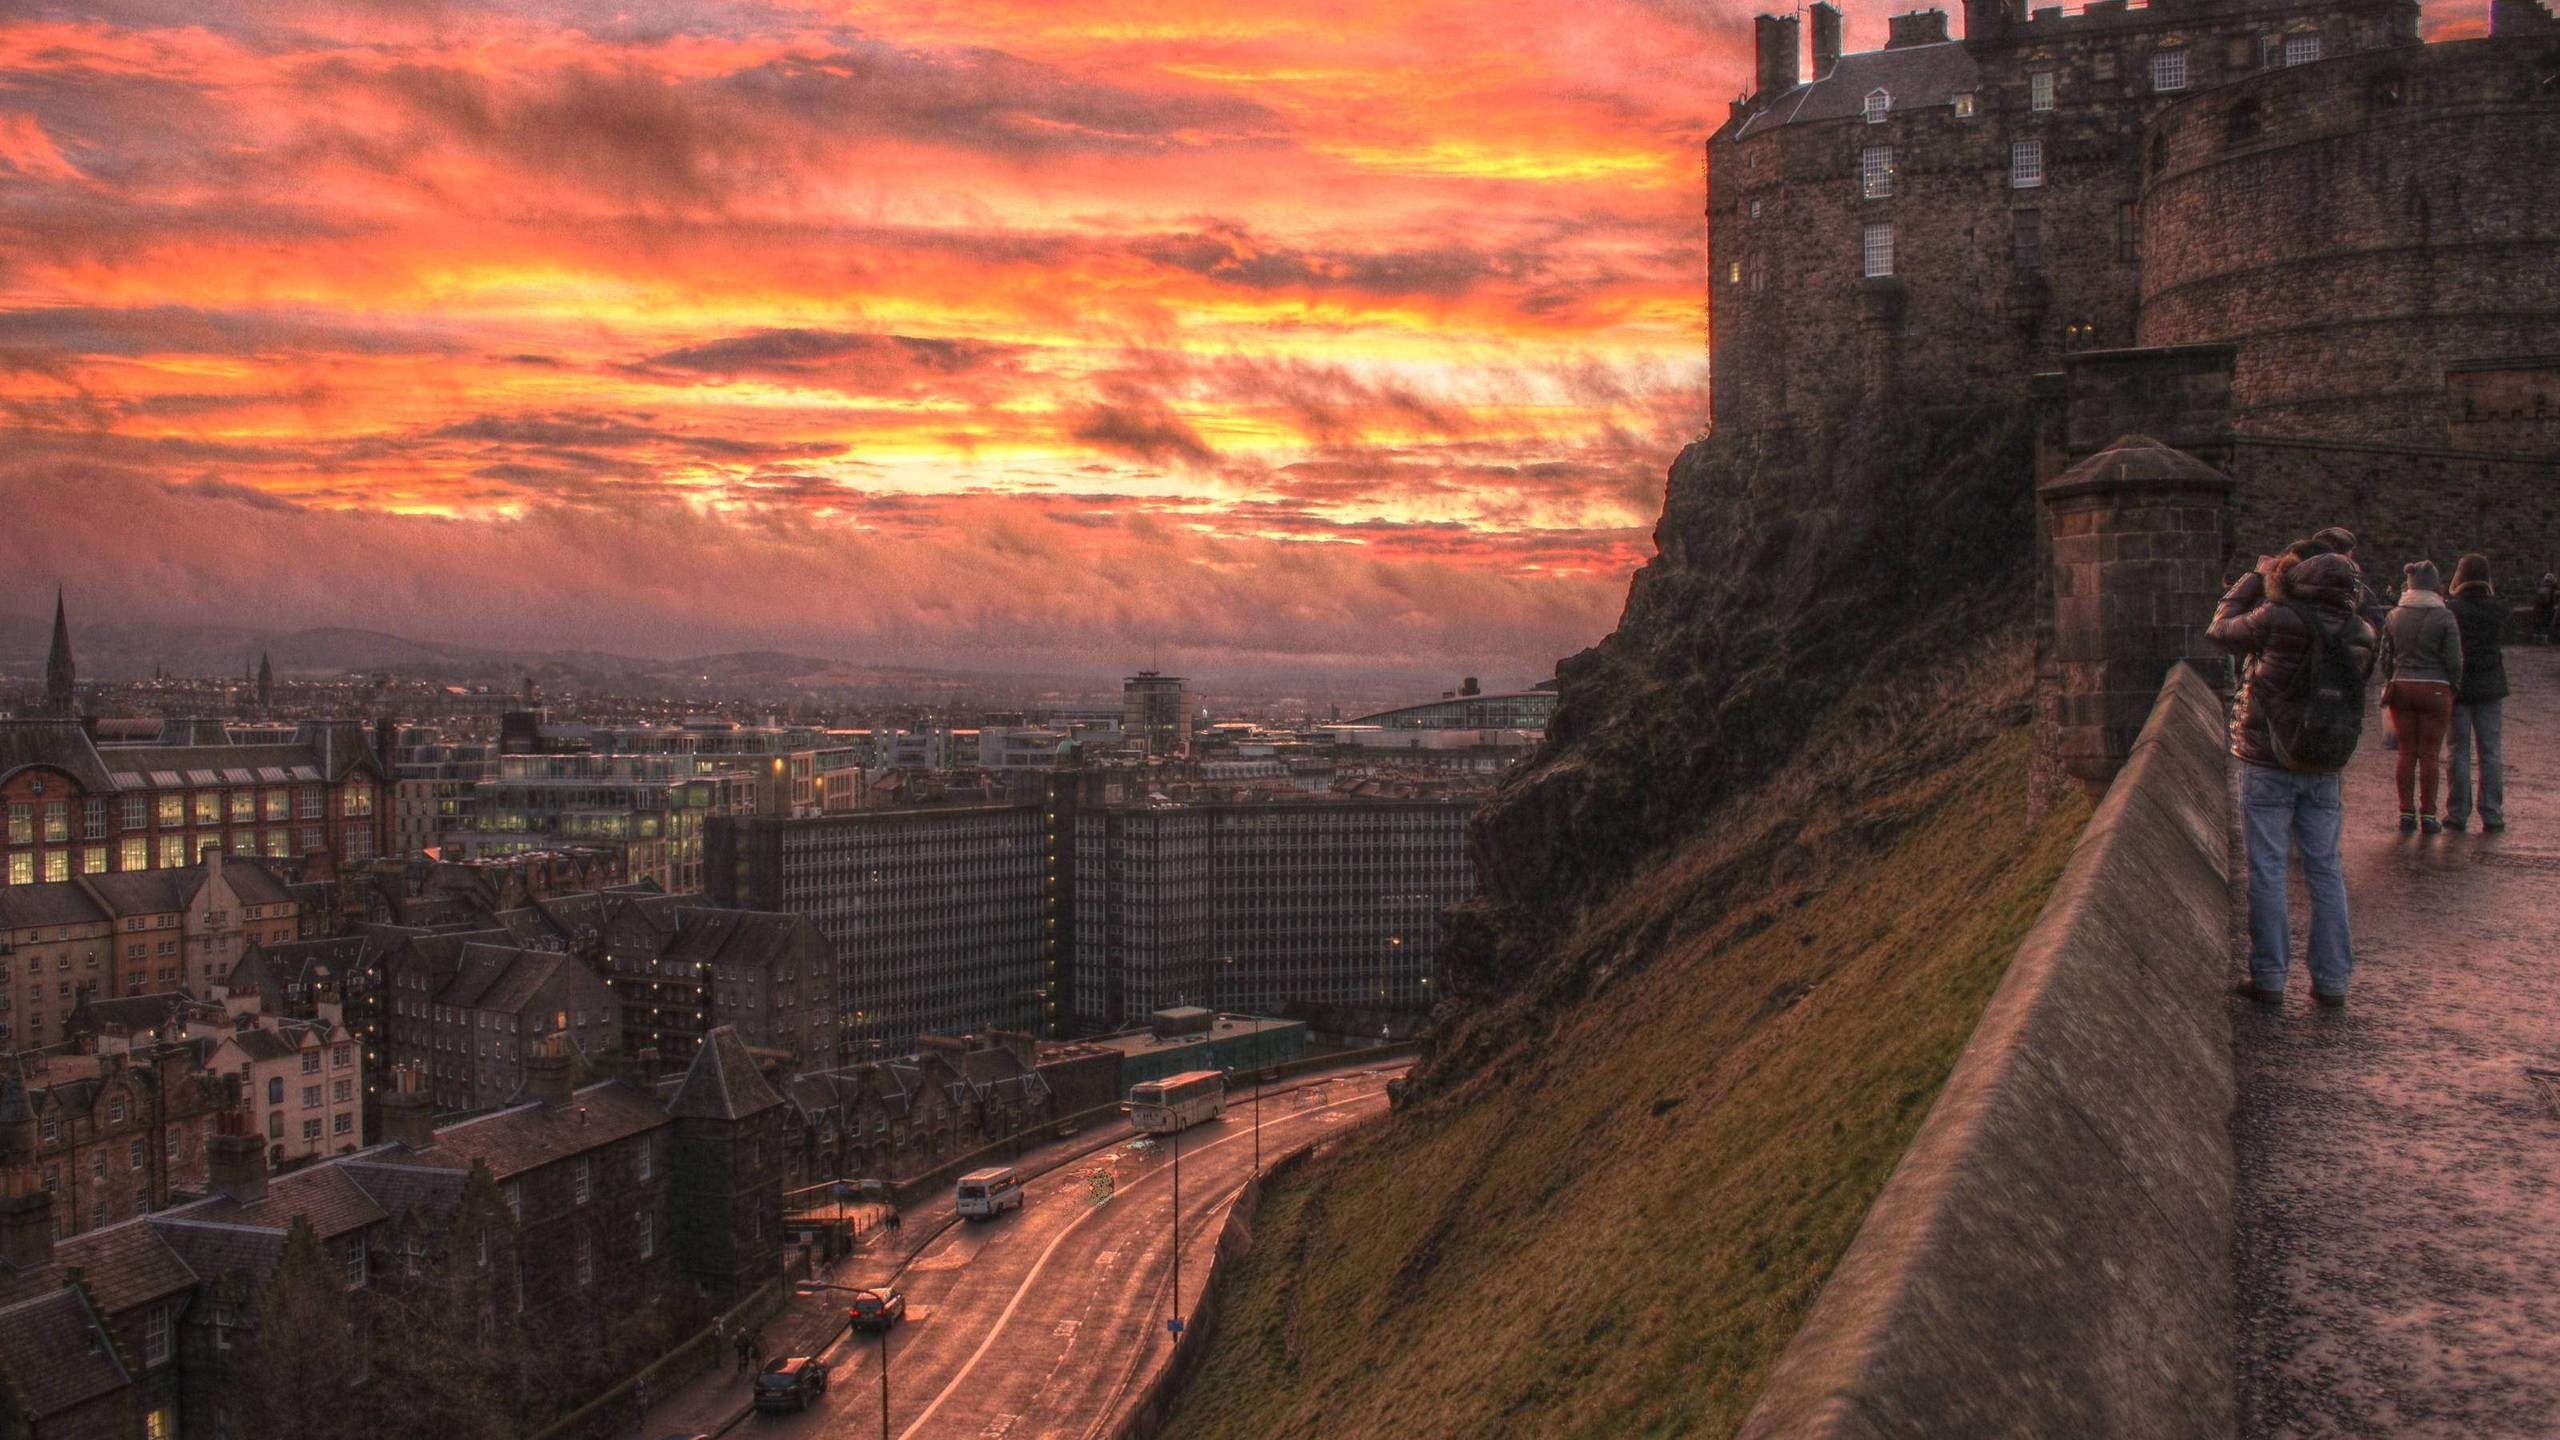 General 2560x1440 sky city sunset Edinburgh Scotland building architecture HDR UK castle cityscape